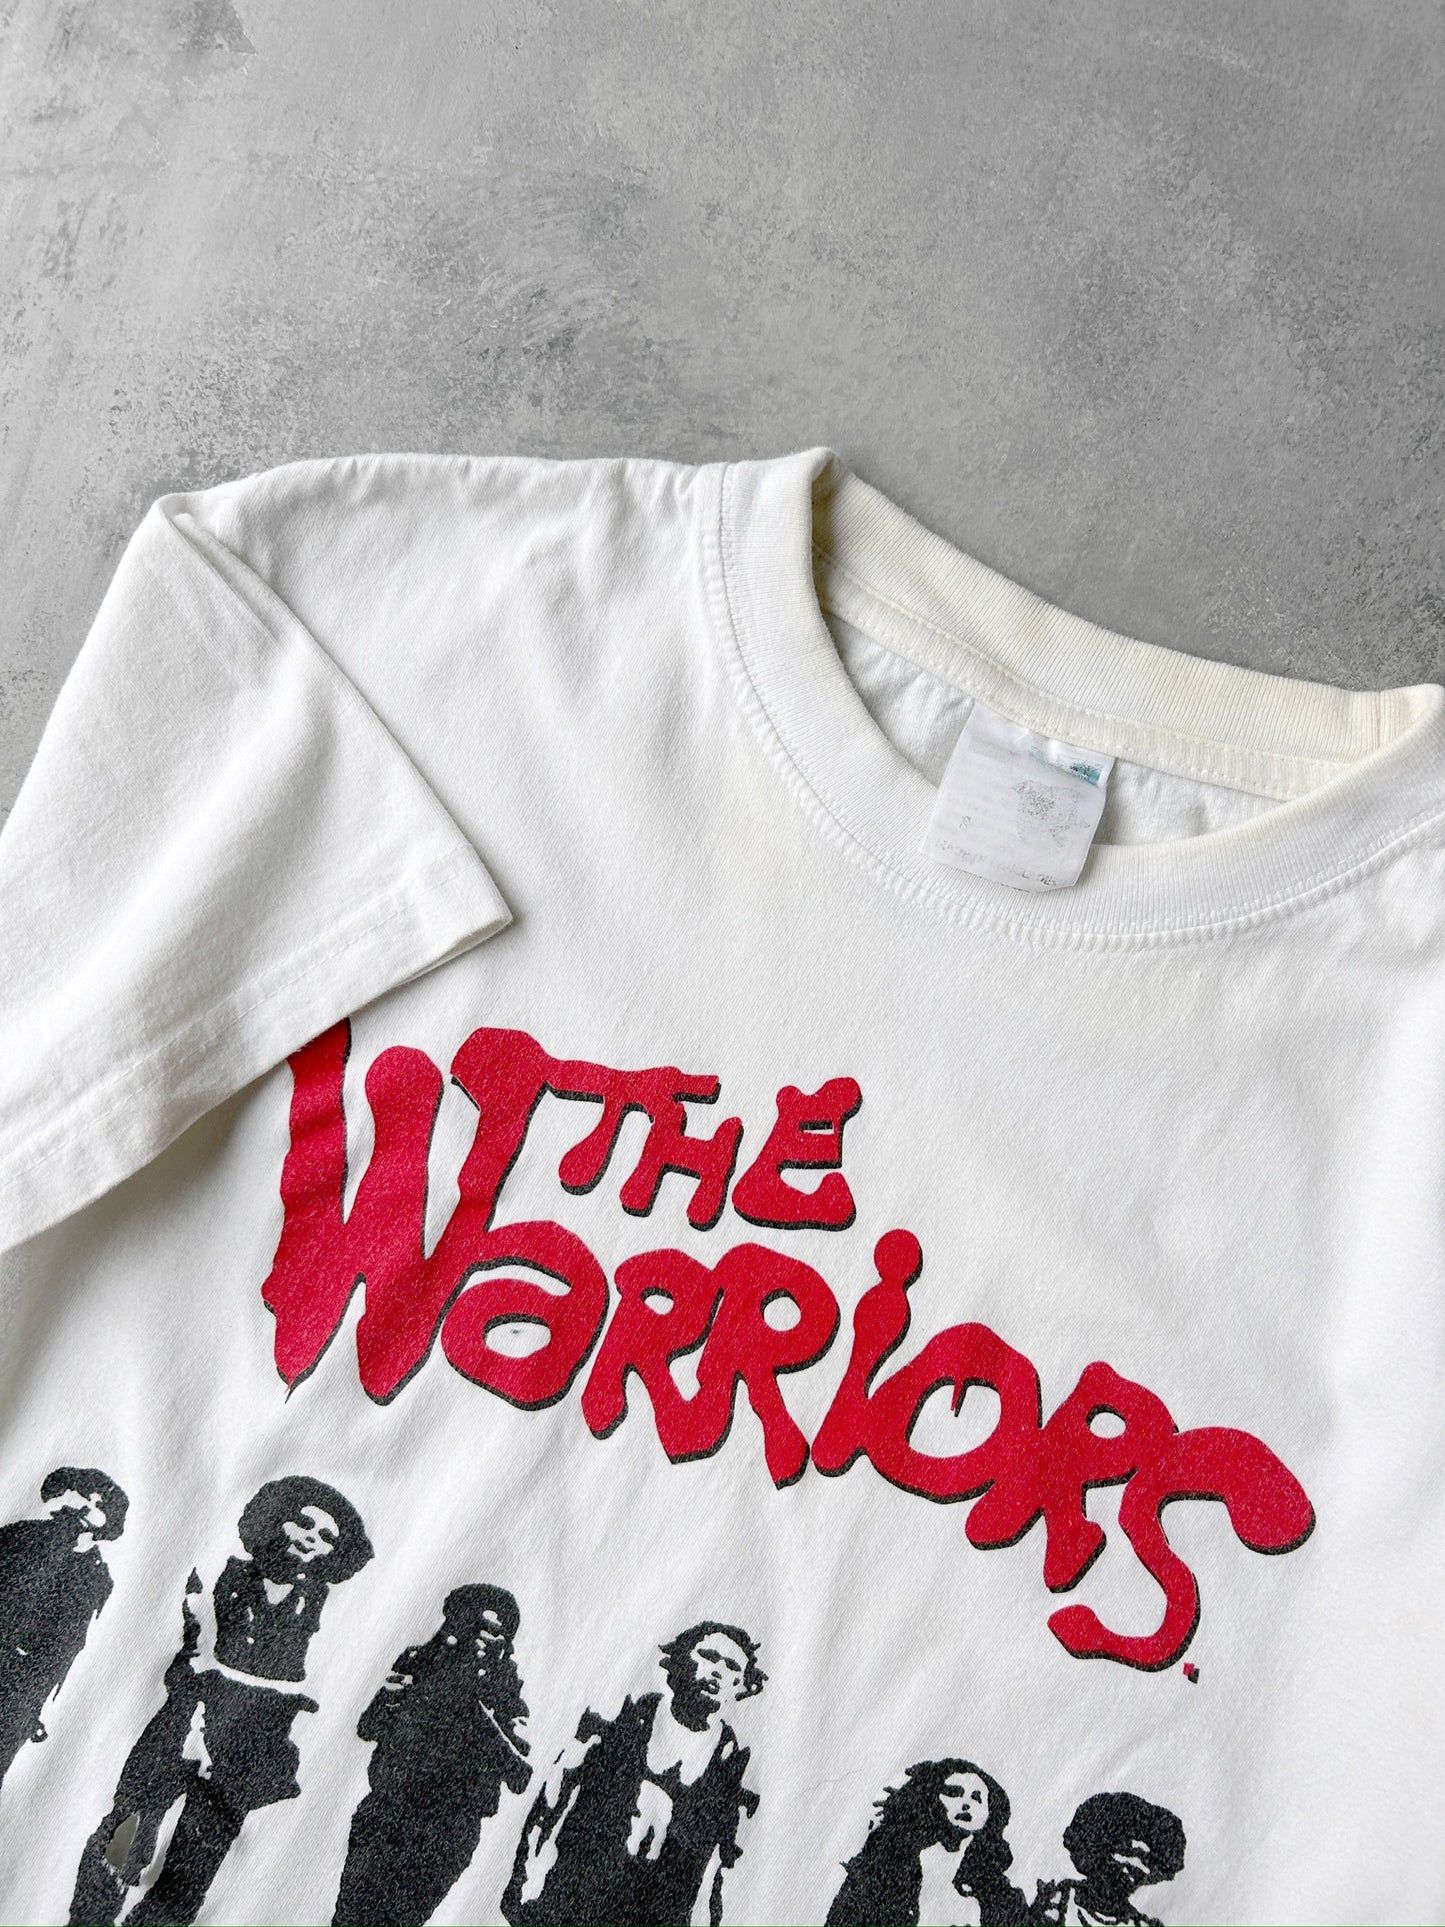 The Warriors T-Shirt 00's - Small / Medium